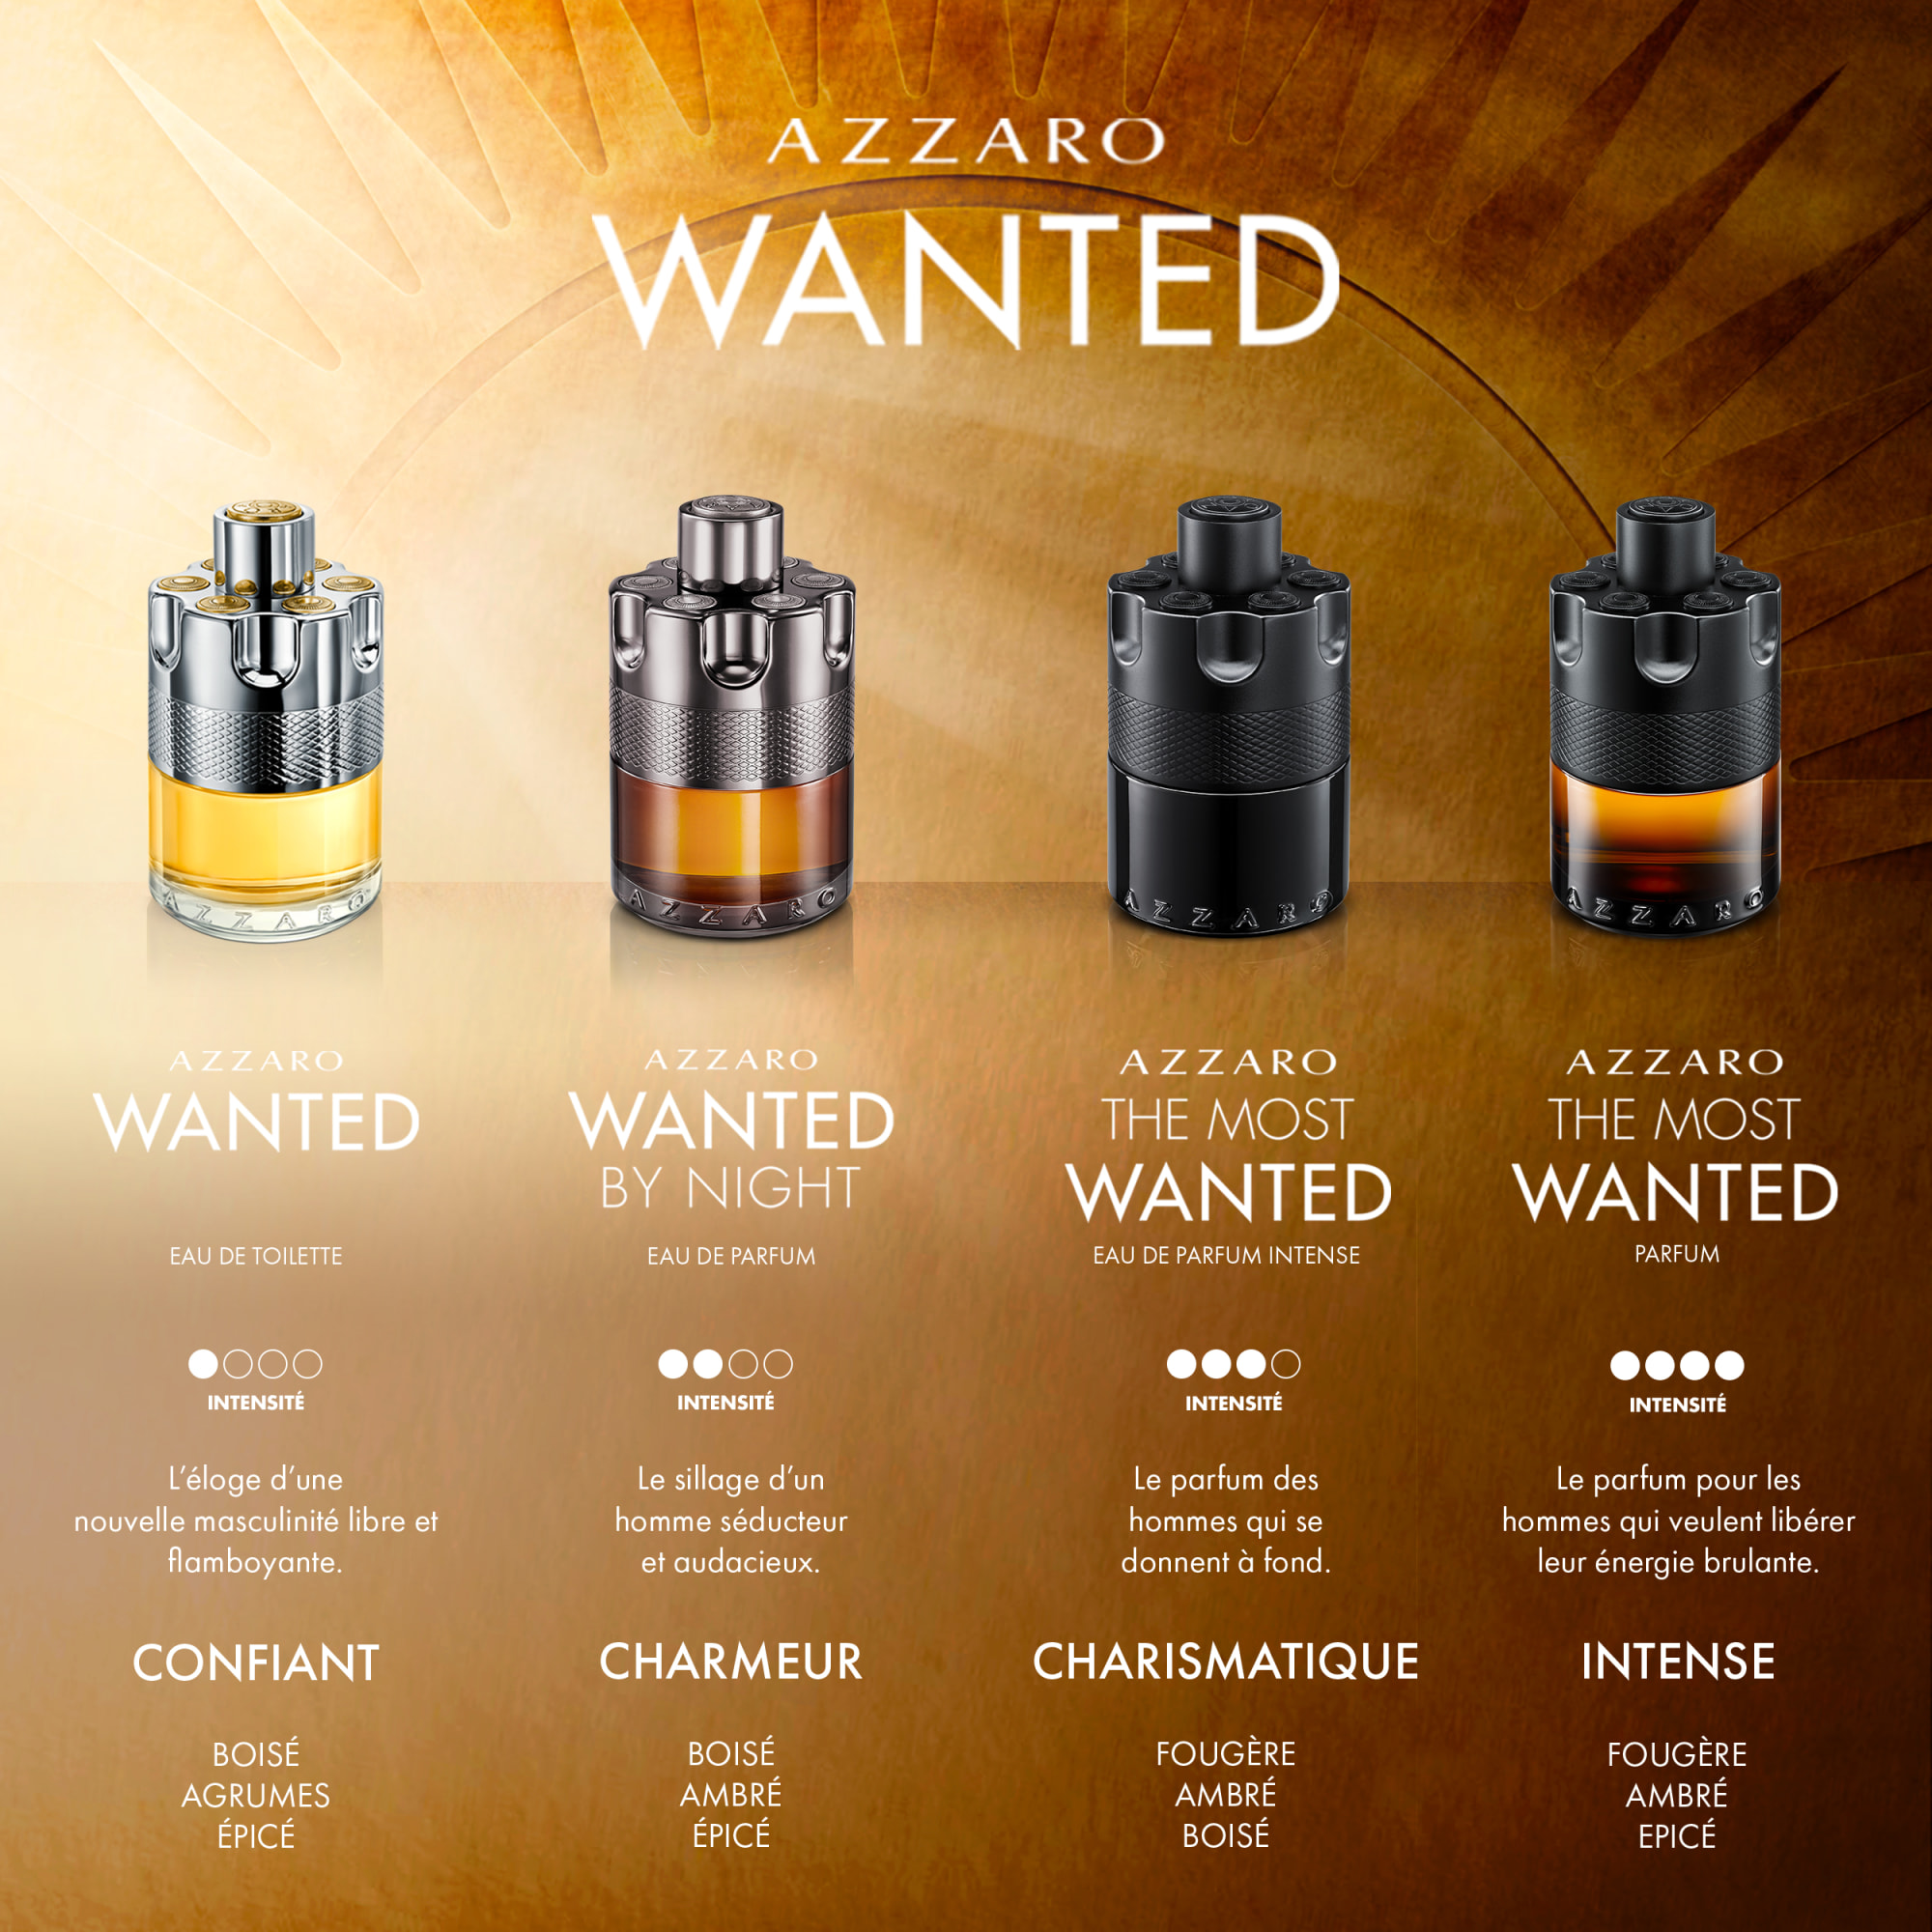 Azzaro The Most Wanted 50ml - Eau de Parfum Intense